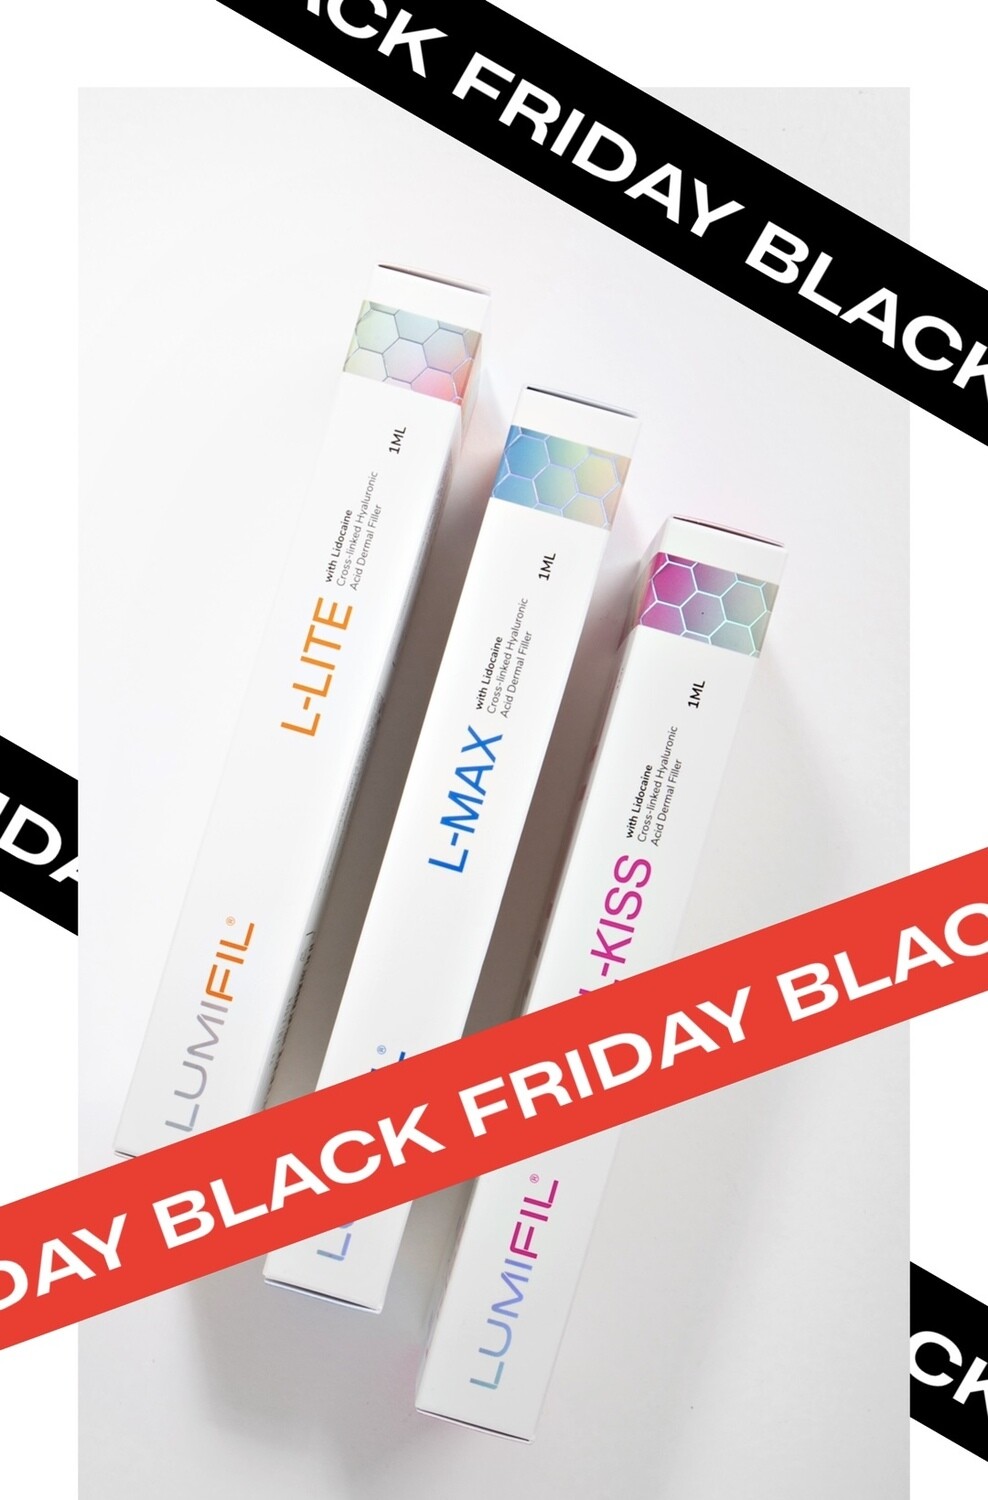 Lumifil Bundle Black Friday Deals (6-9 products)